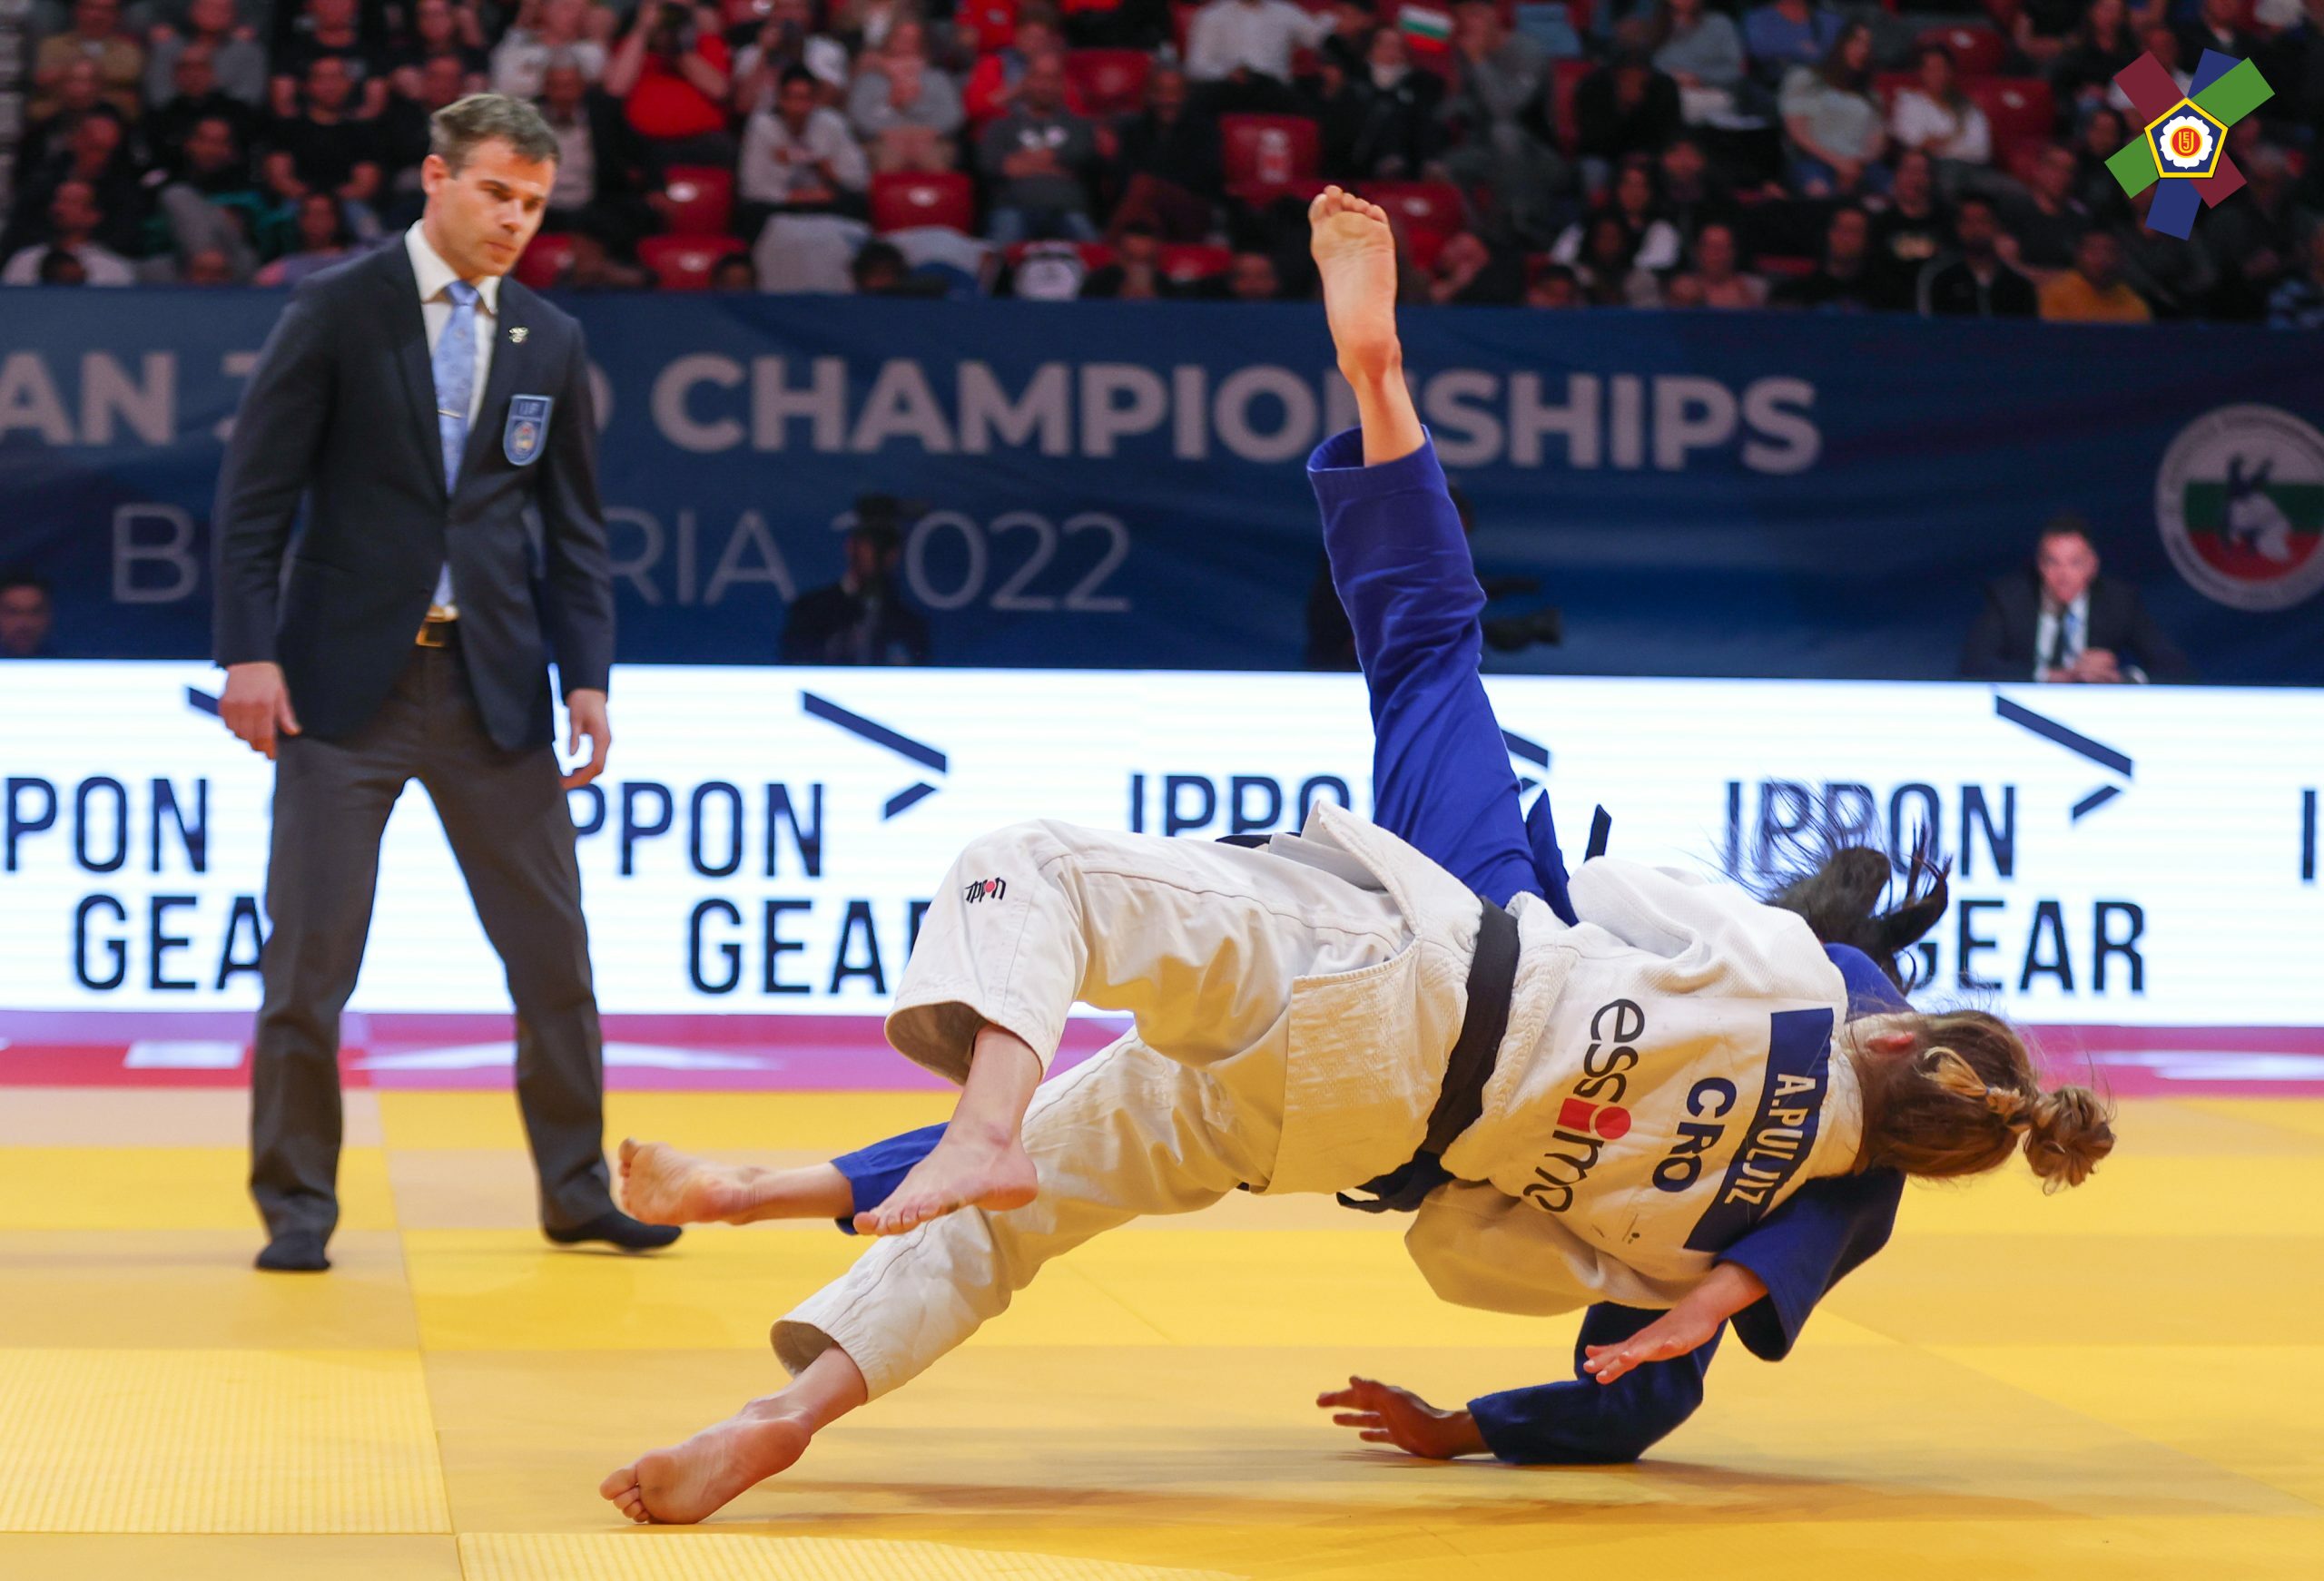 Carlos-Ferreira-European-Judo-Championships-Sofia-2022